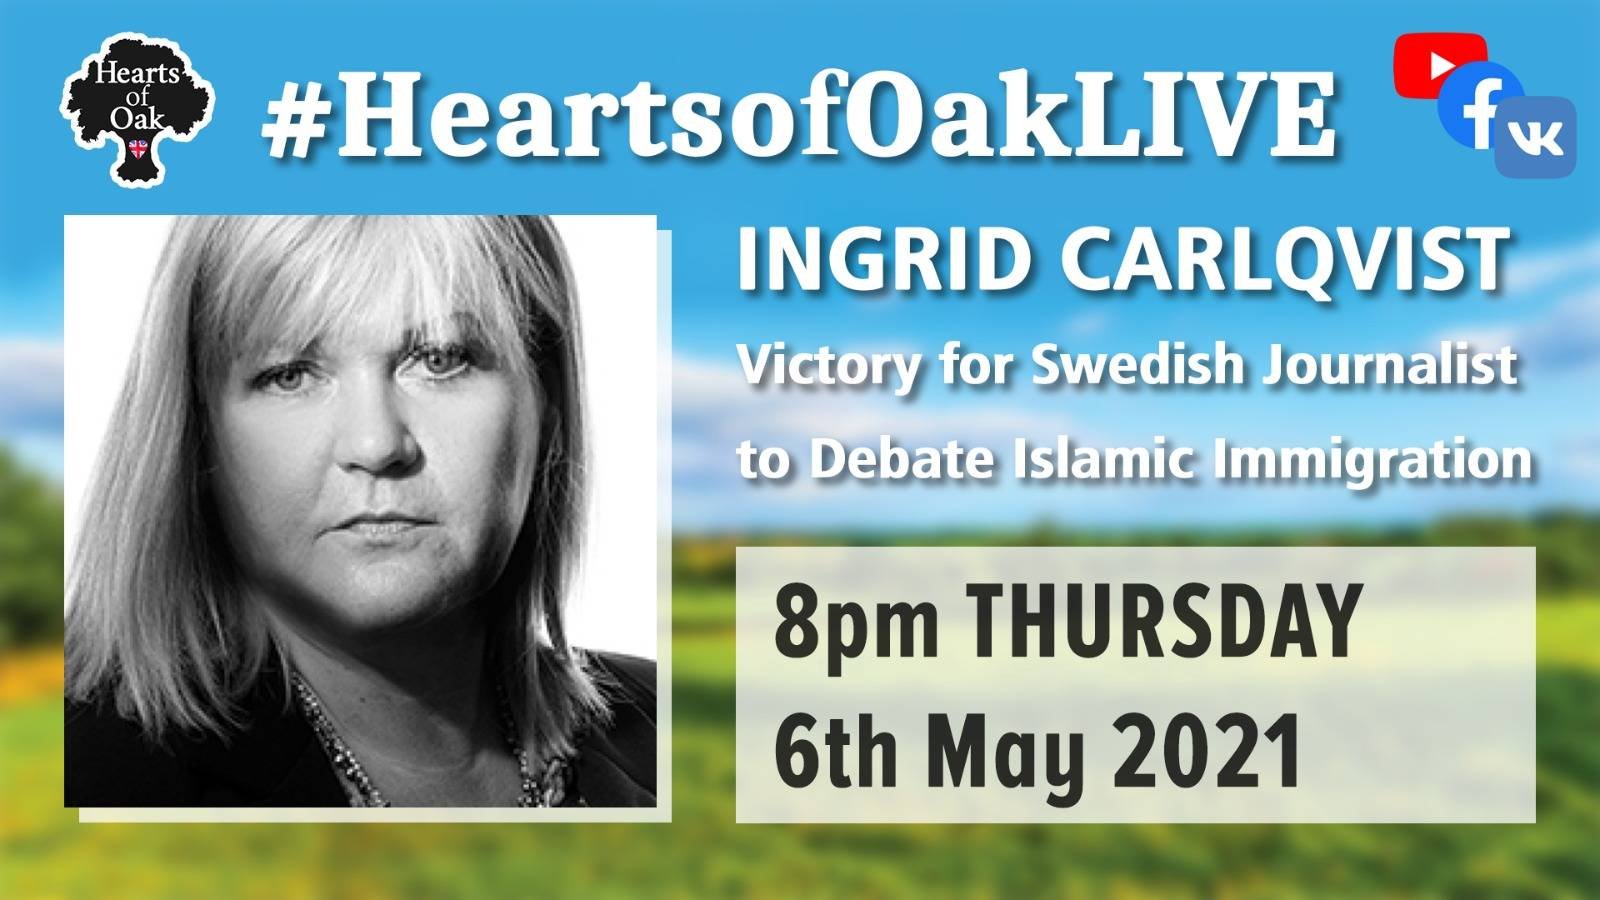 Victory for Swedish Journalist to Debate Islamic Immigration: Ingrid Carlqvist